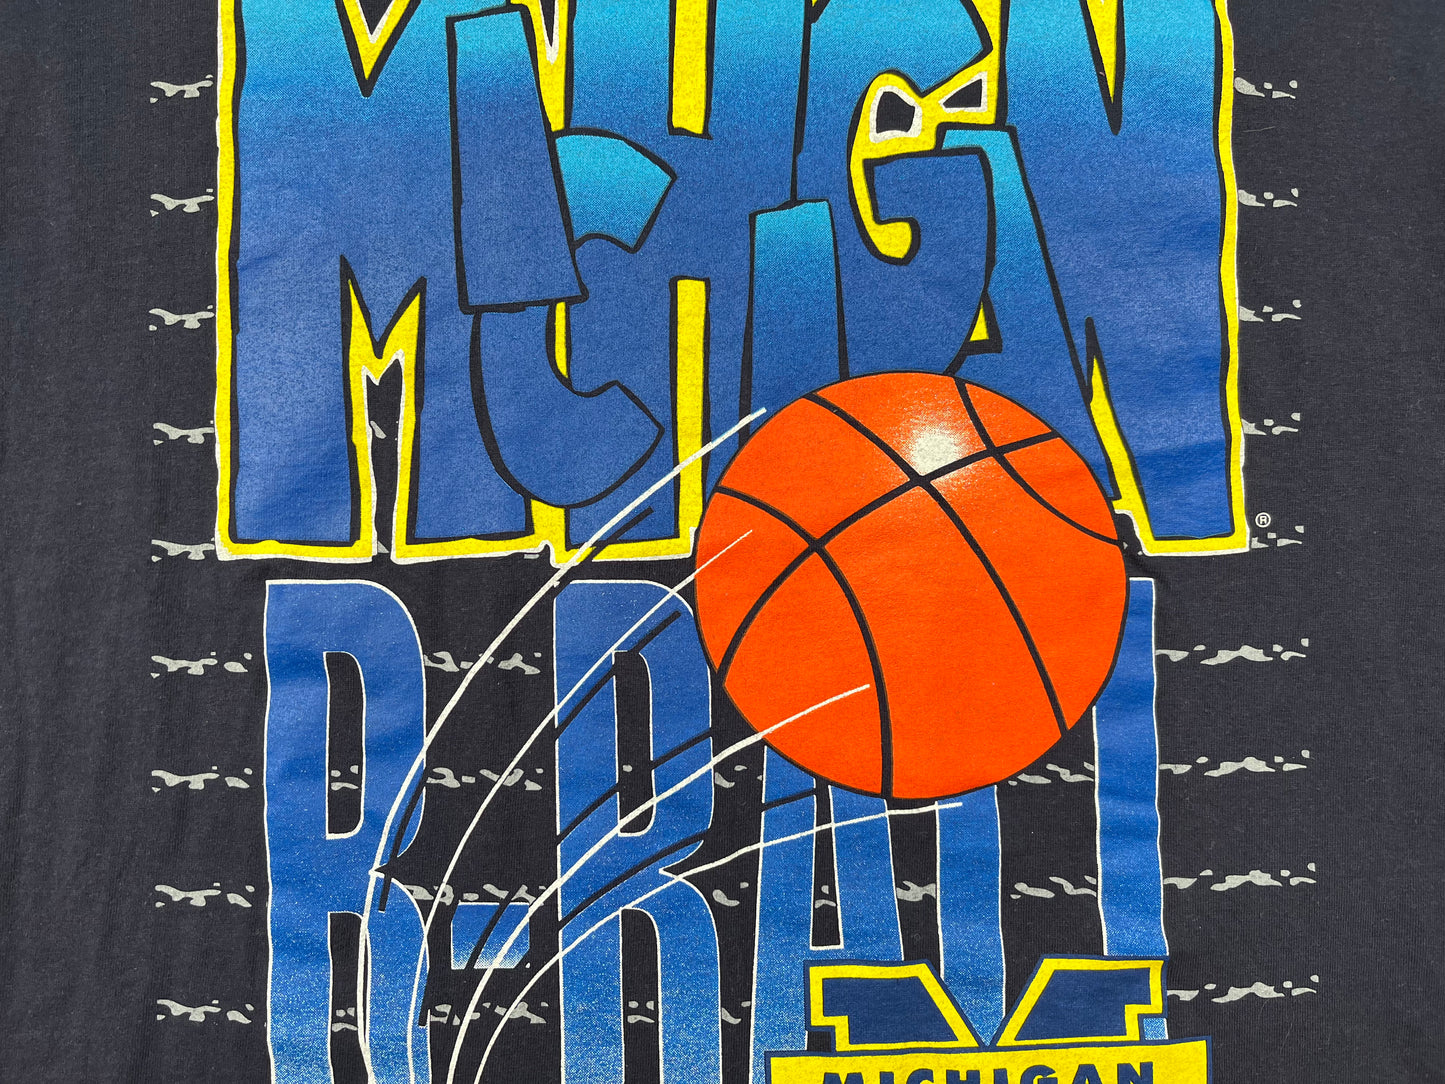 Michigan Basketball Graphic T-Shirt